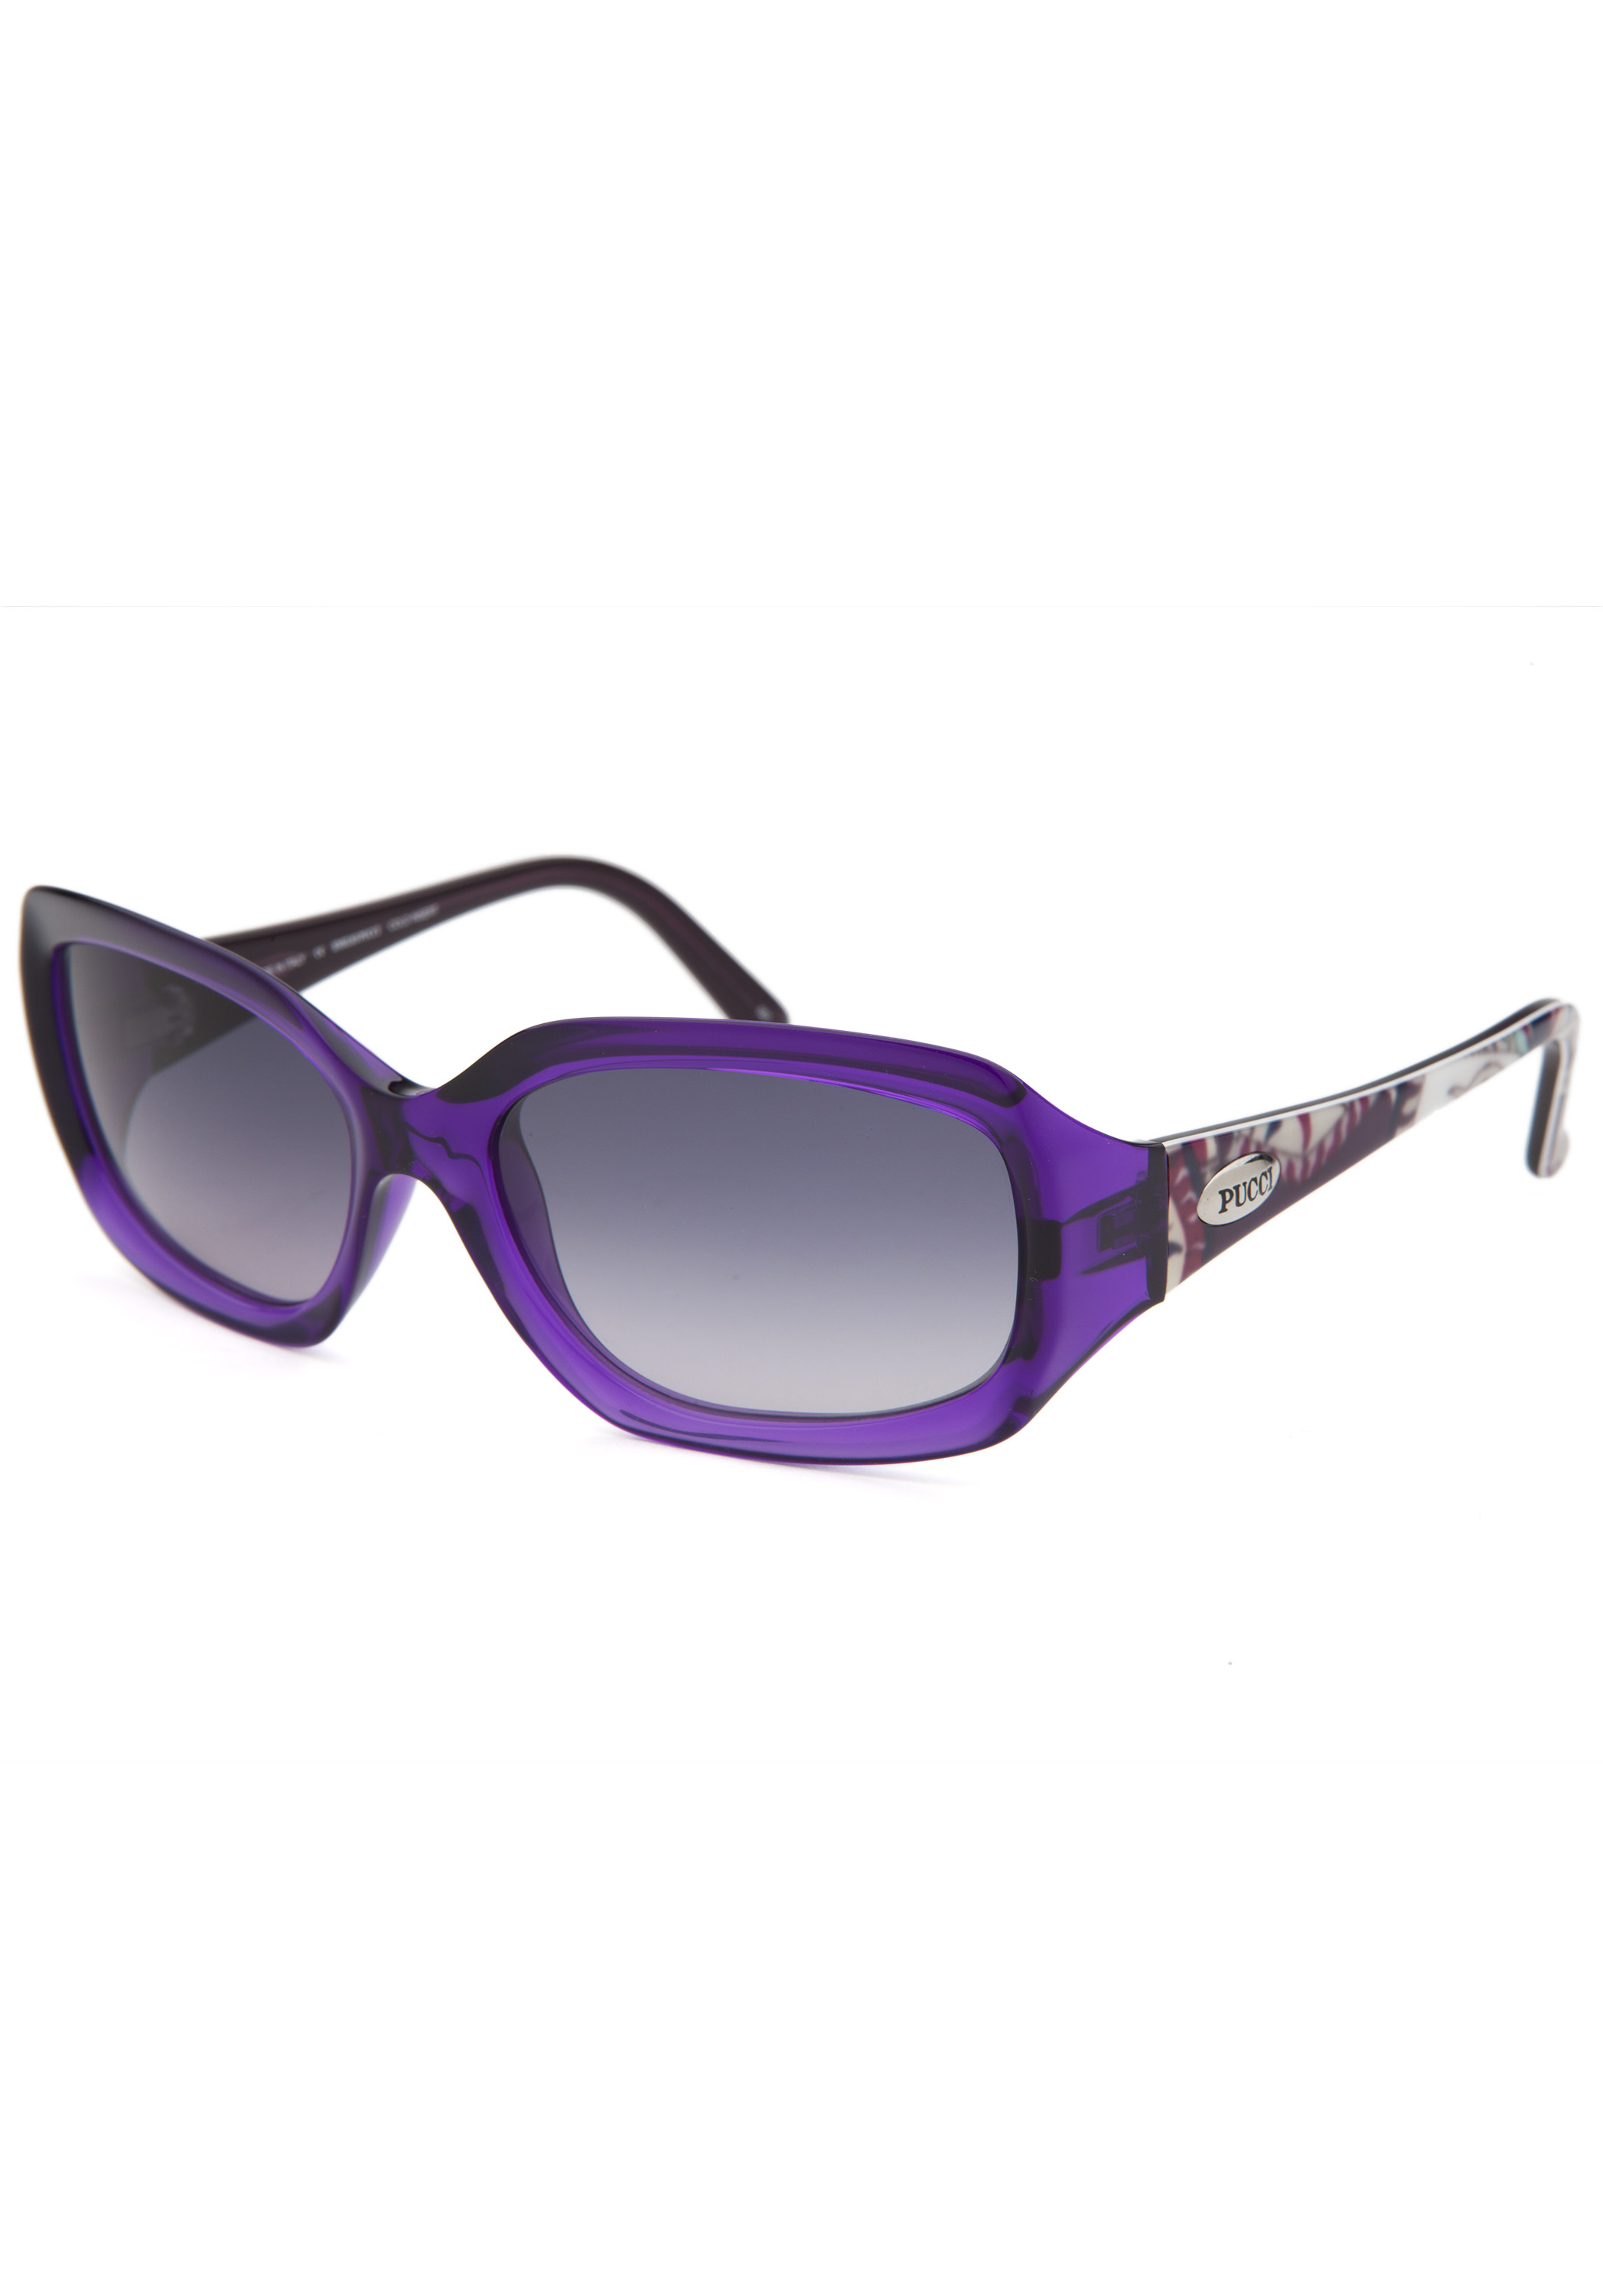 Emilio Pucci Women's Rectangle Translucent Purple Sunglasses - Clothing ...